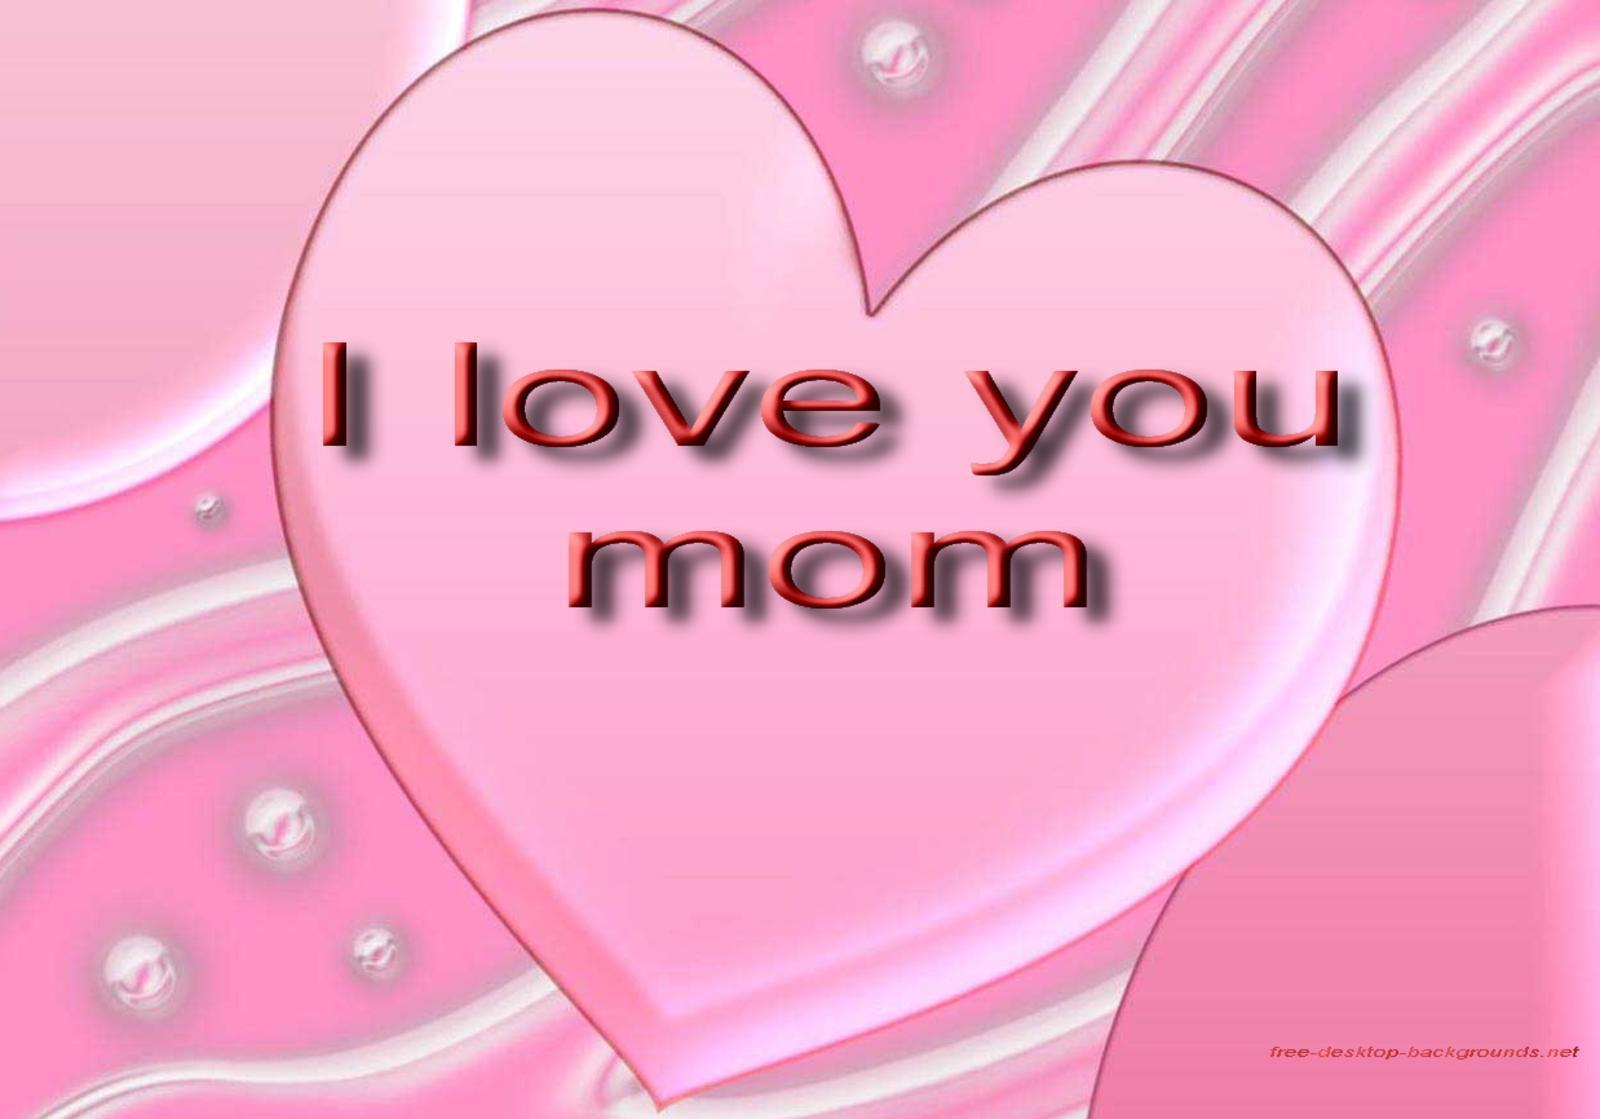 I Love U Mom Wallpaper Image & Picture